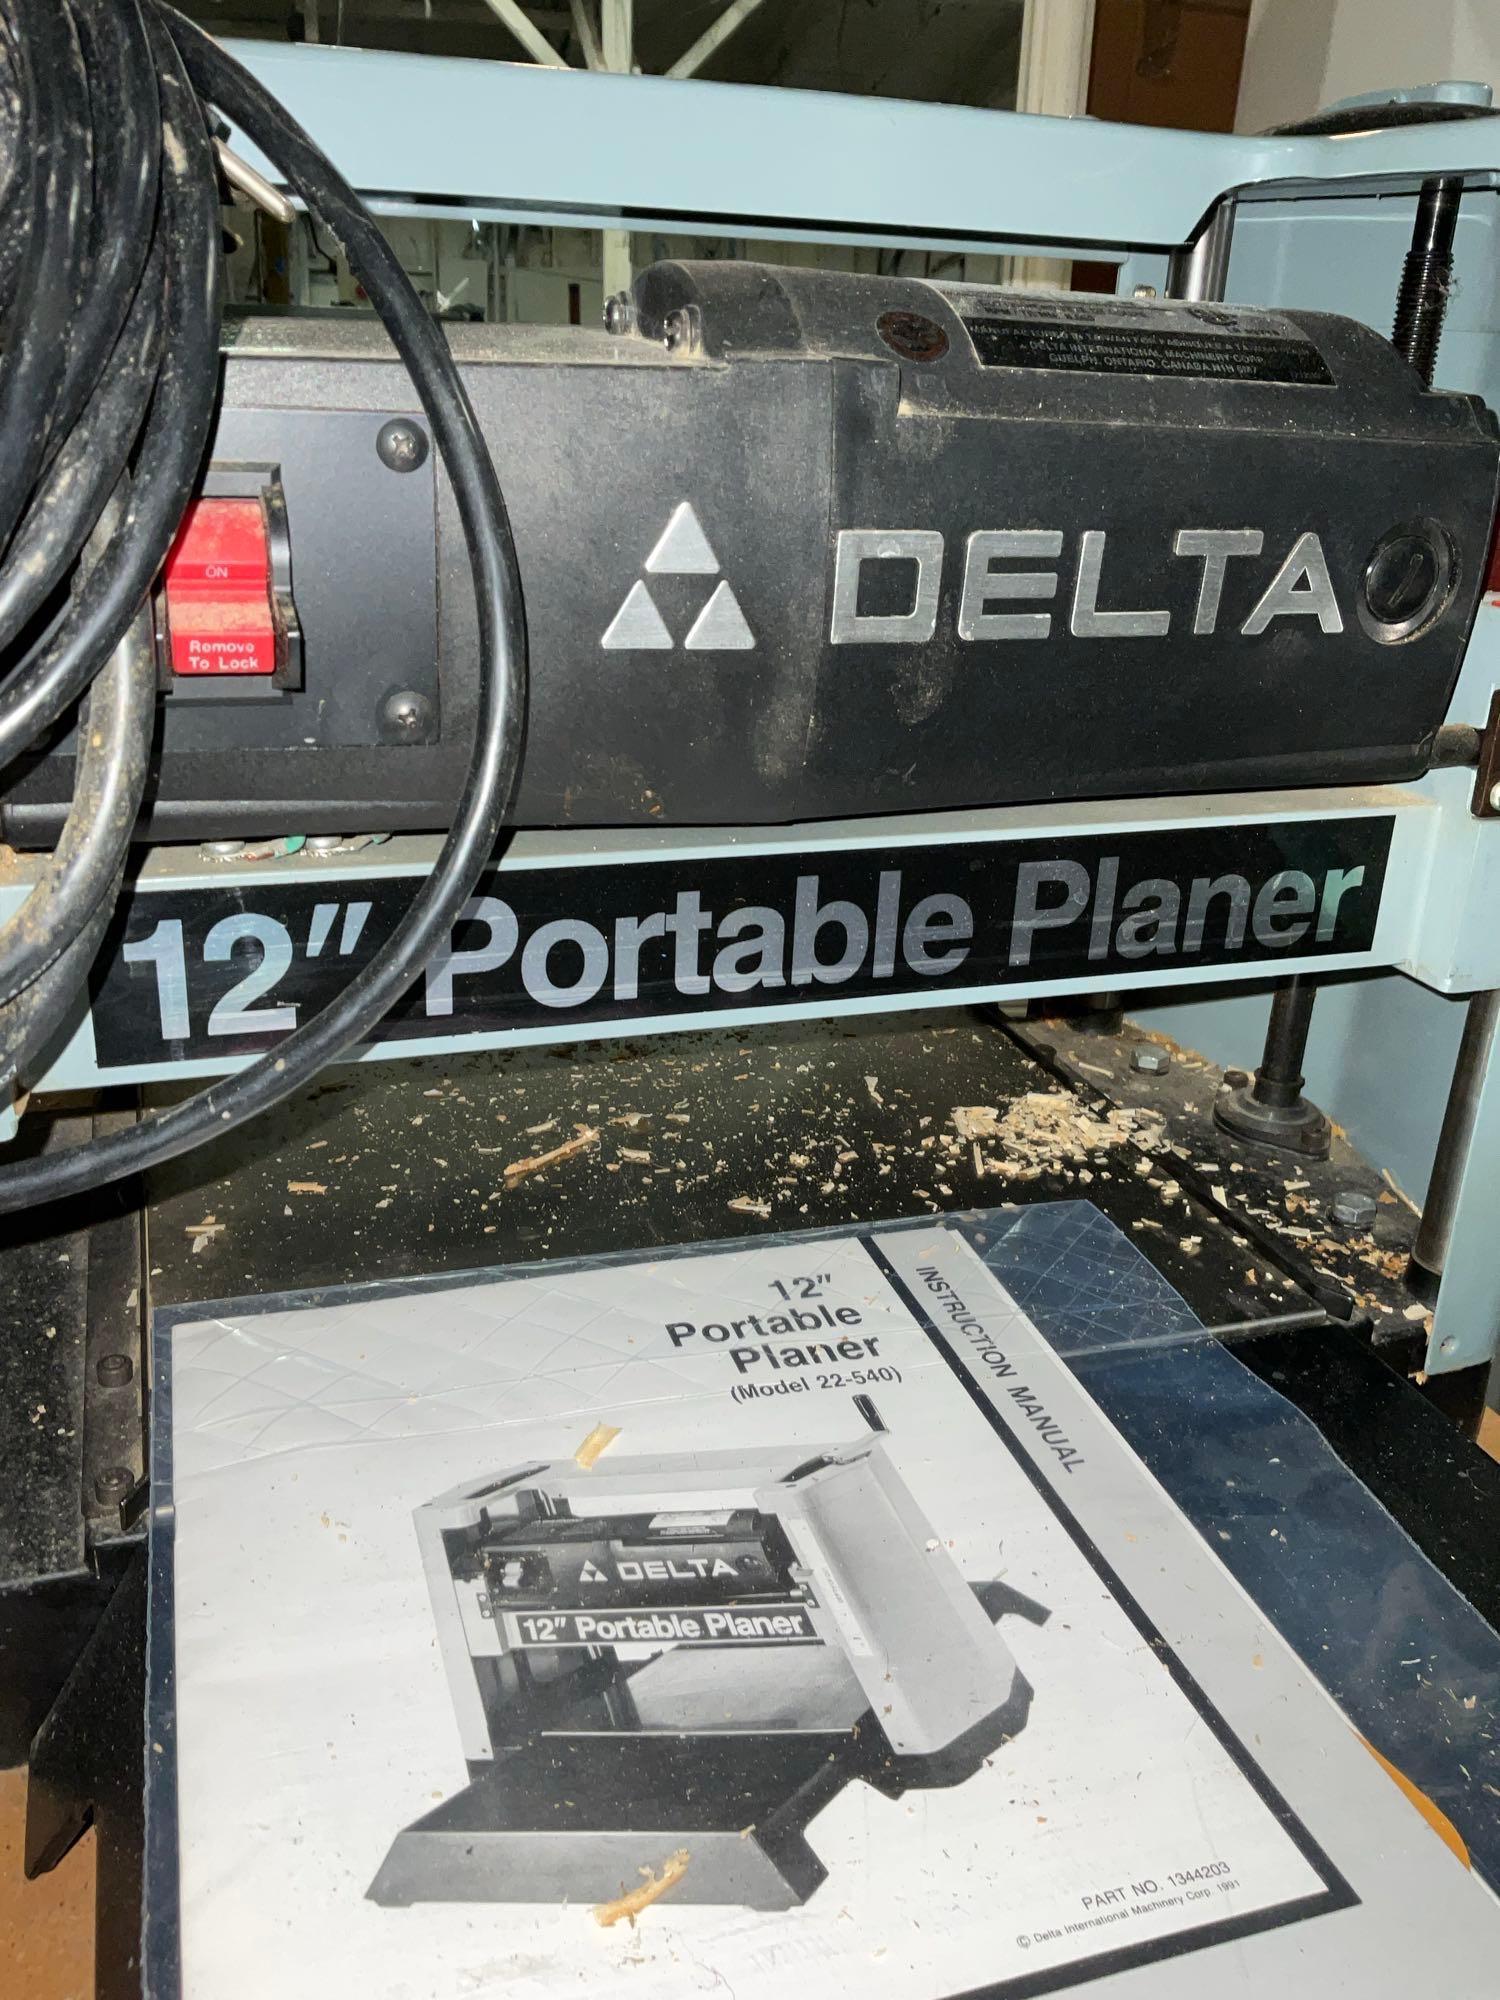 Delta 12" Portable Planer Built into Wheeled Base - Model # 22-530 - See pics